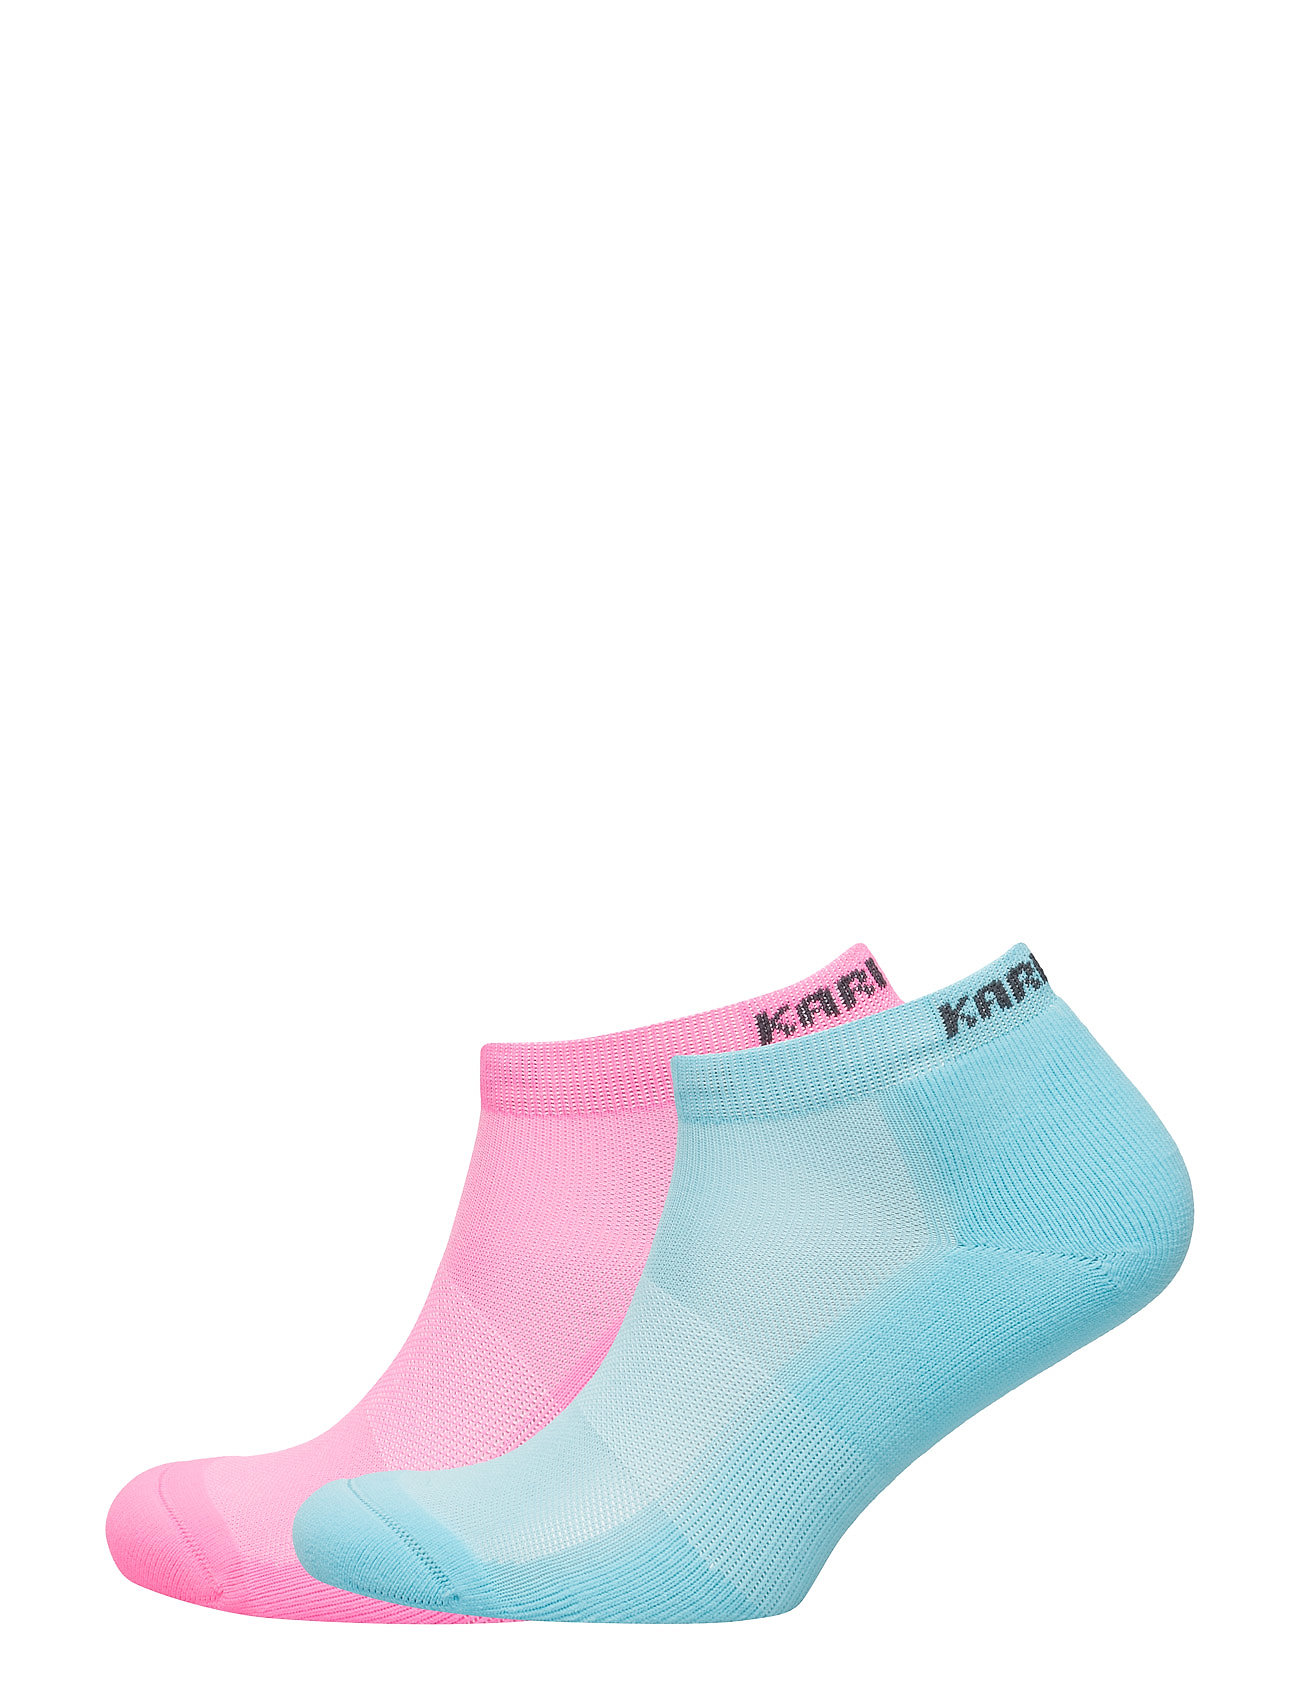 Skare Sock 2pk Lingerie Socks Footies/Ankle Socks Vaaleanpunainen Kari Traa